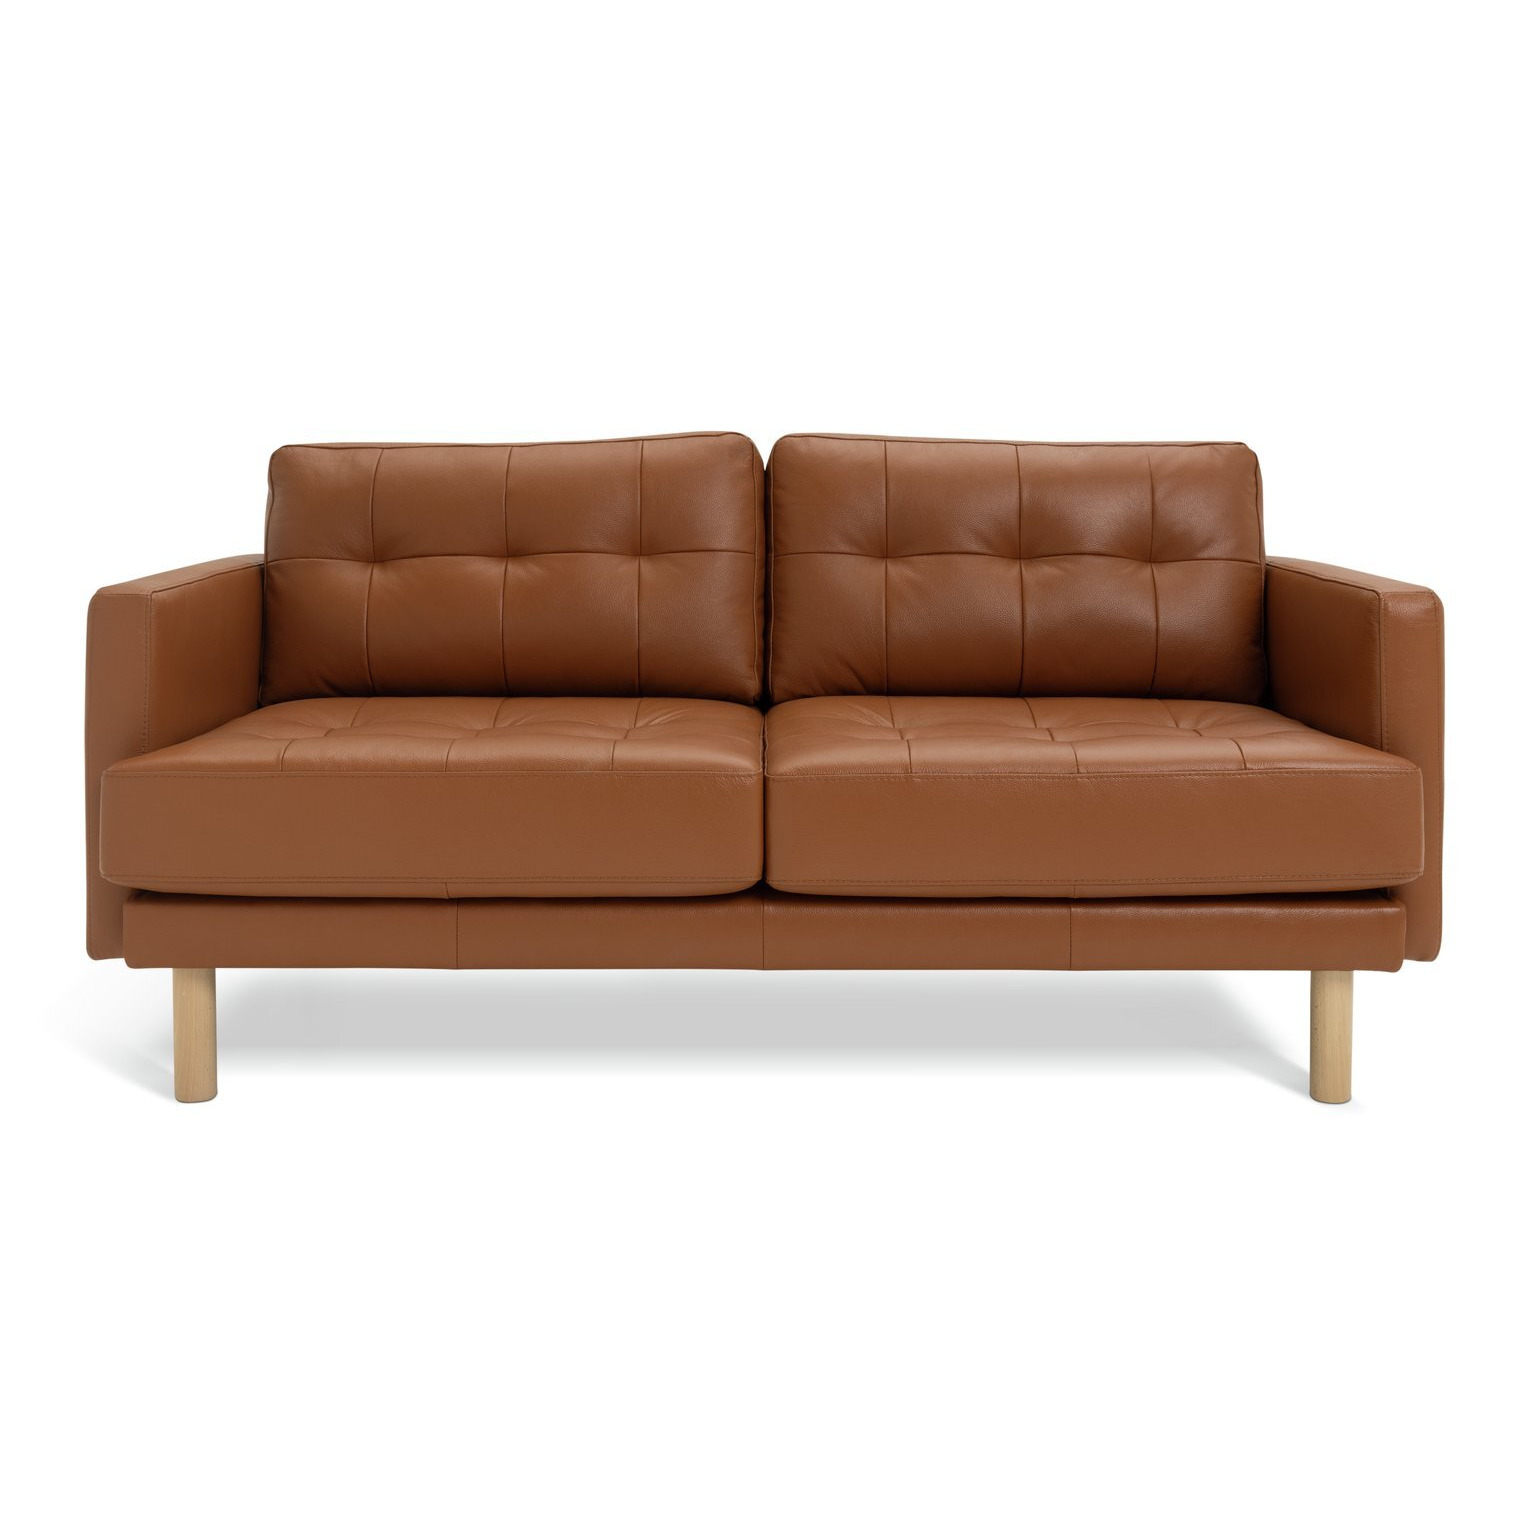 Habitat Newell Leather 2 Seater Sofa - Tan - image 1